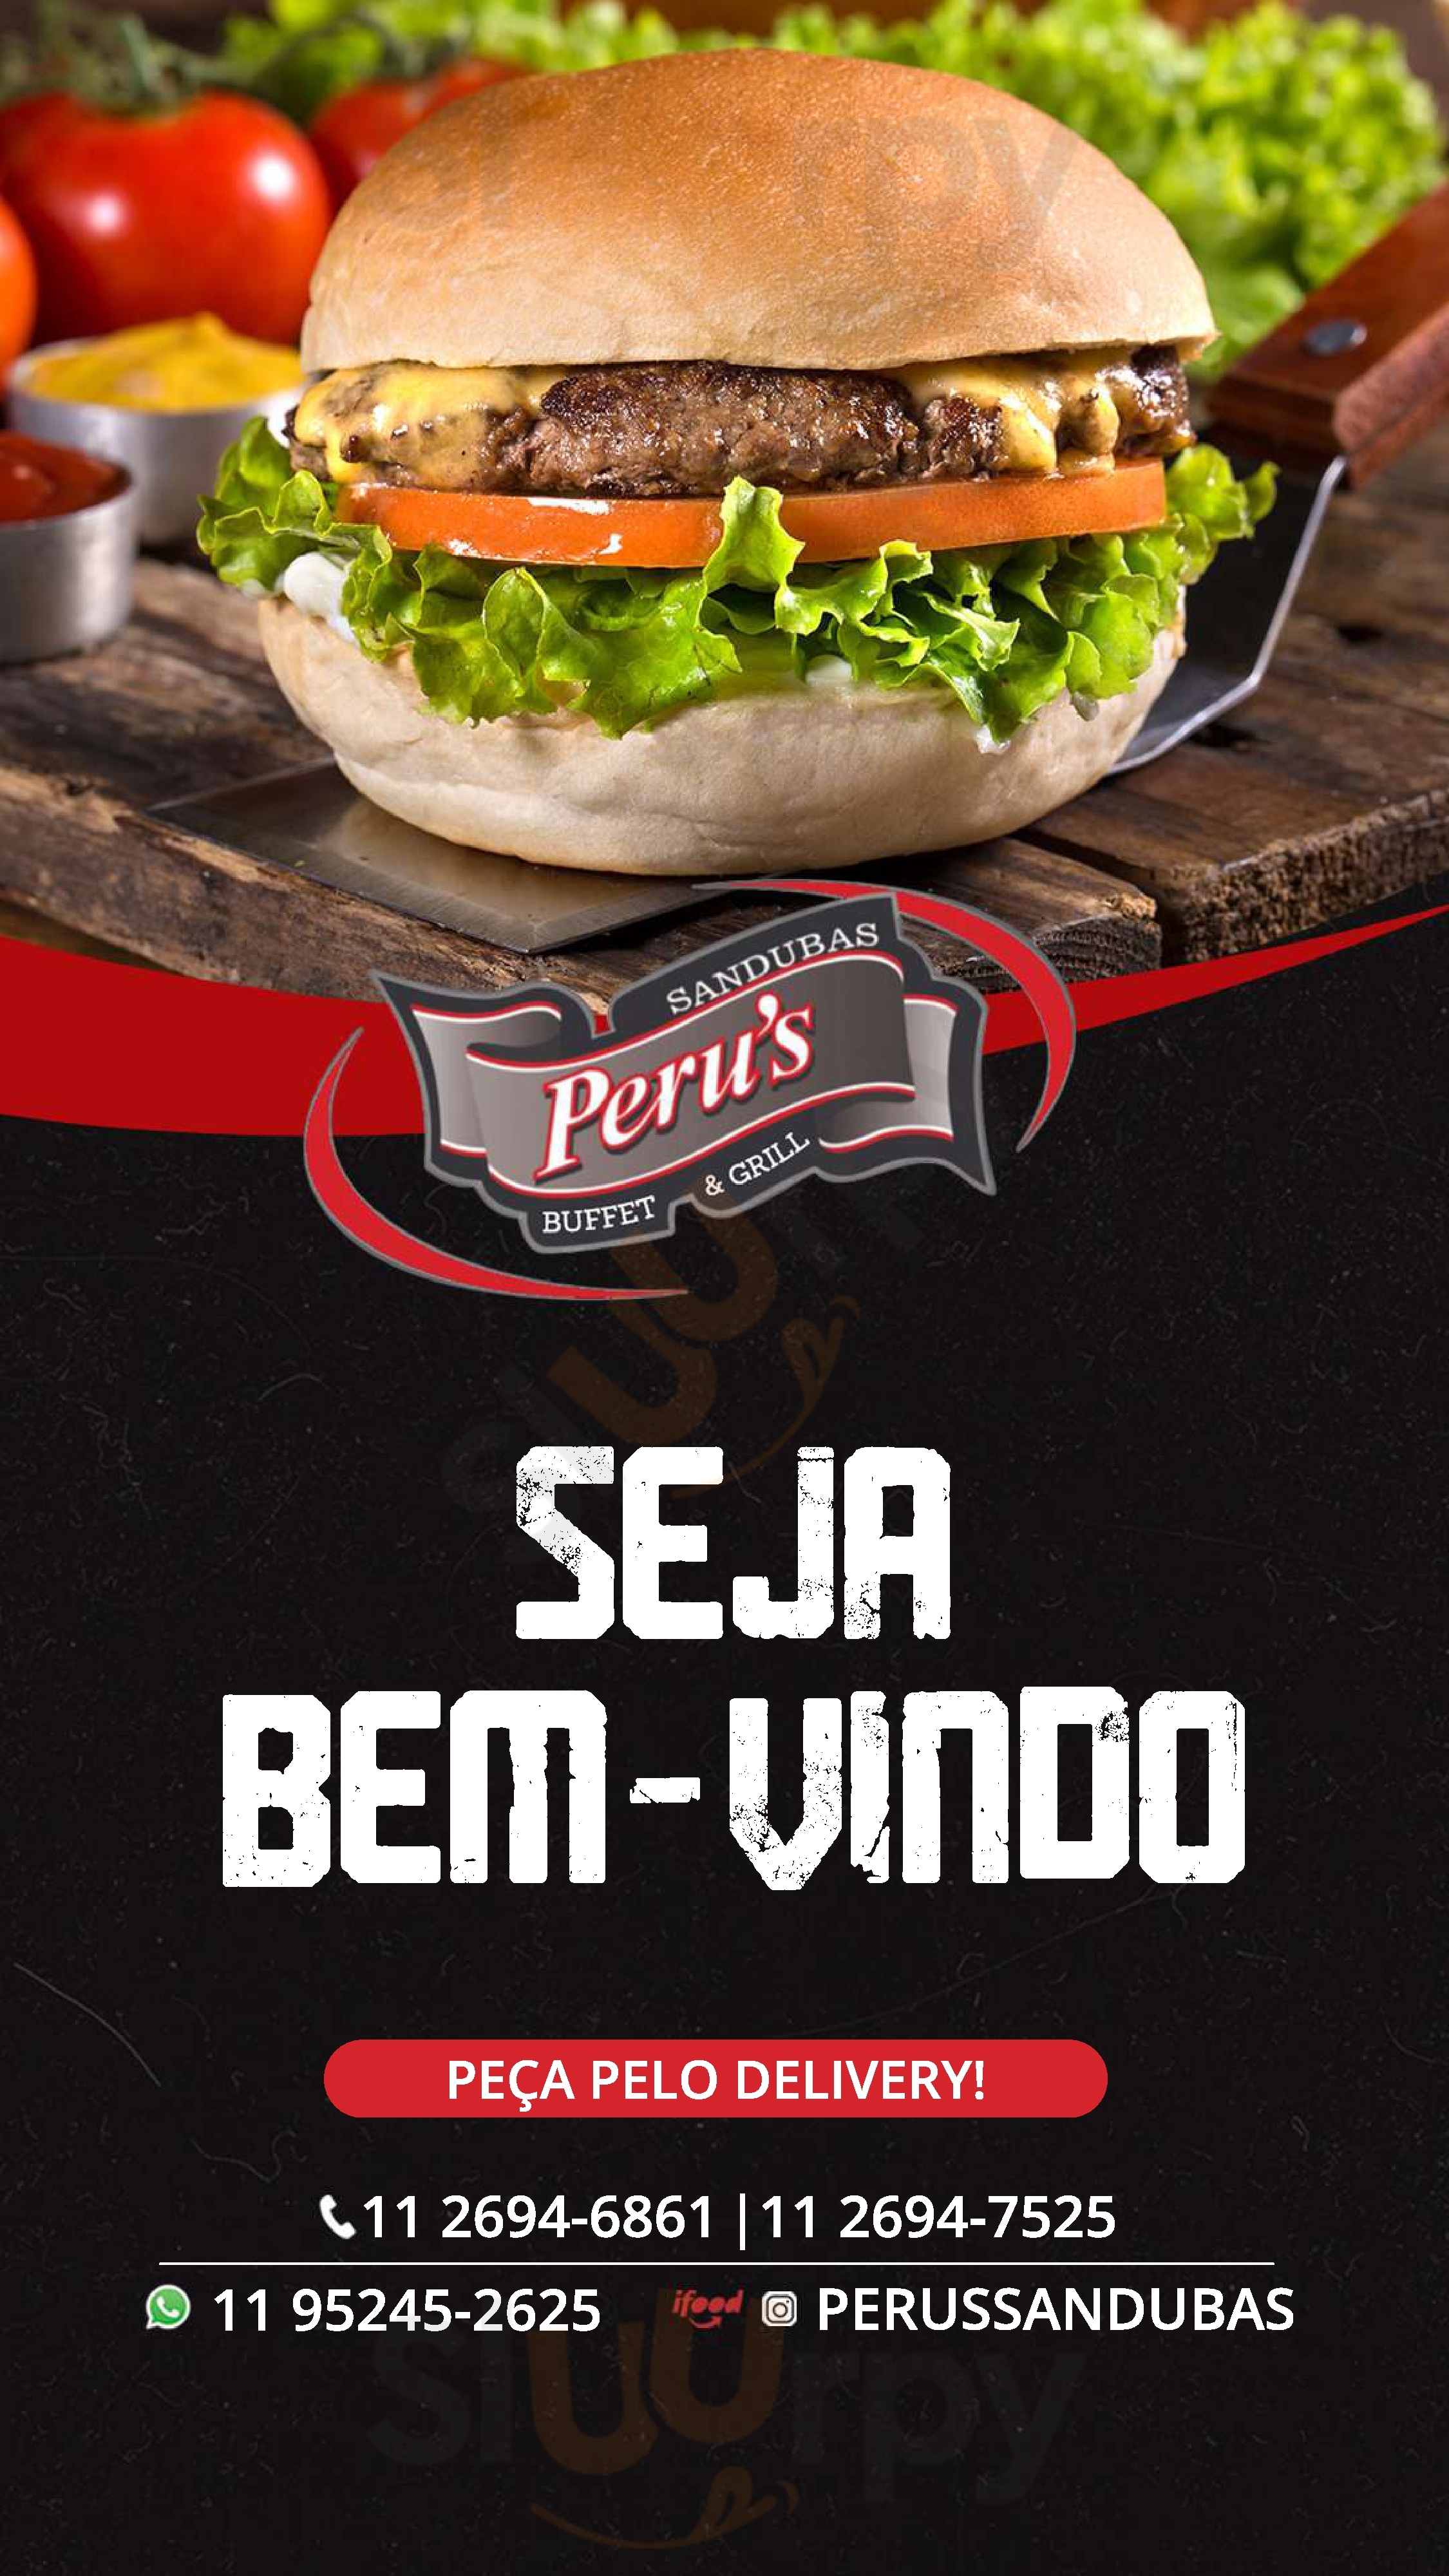 Peru's Sandubas São Paulo Menu - 1